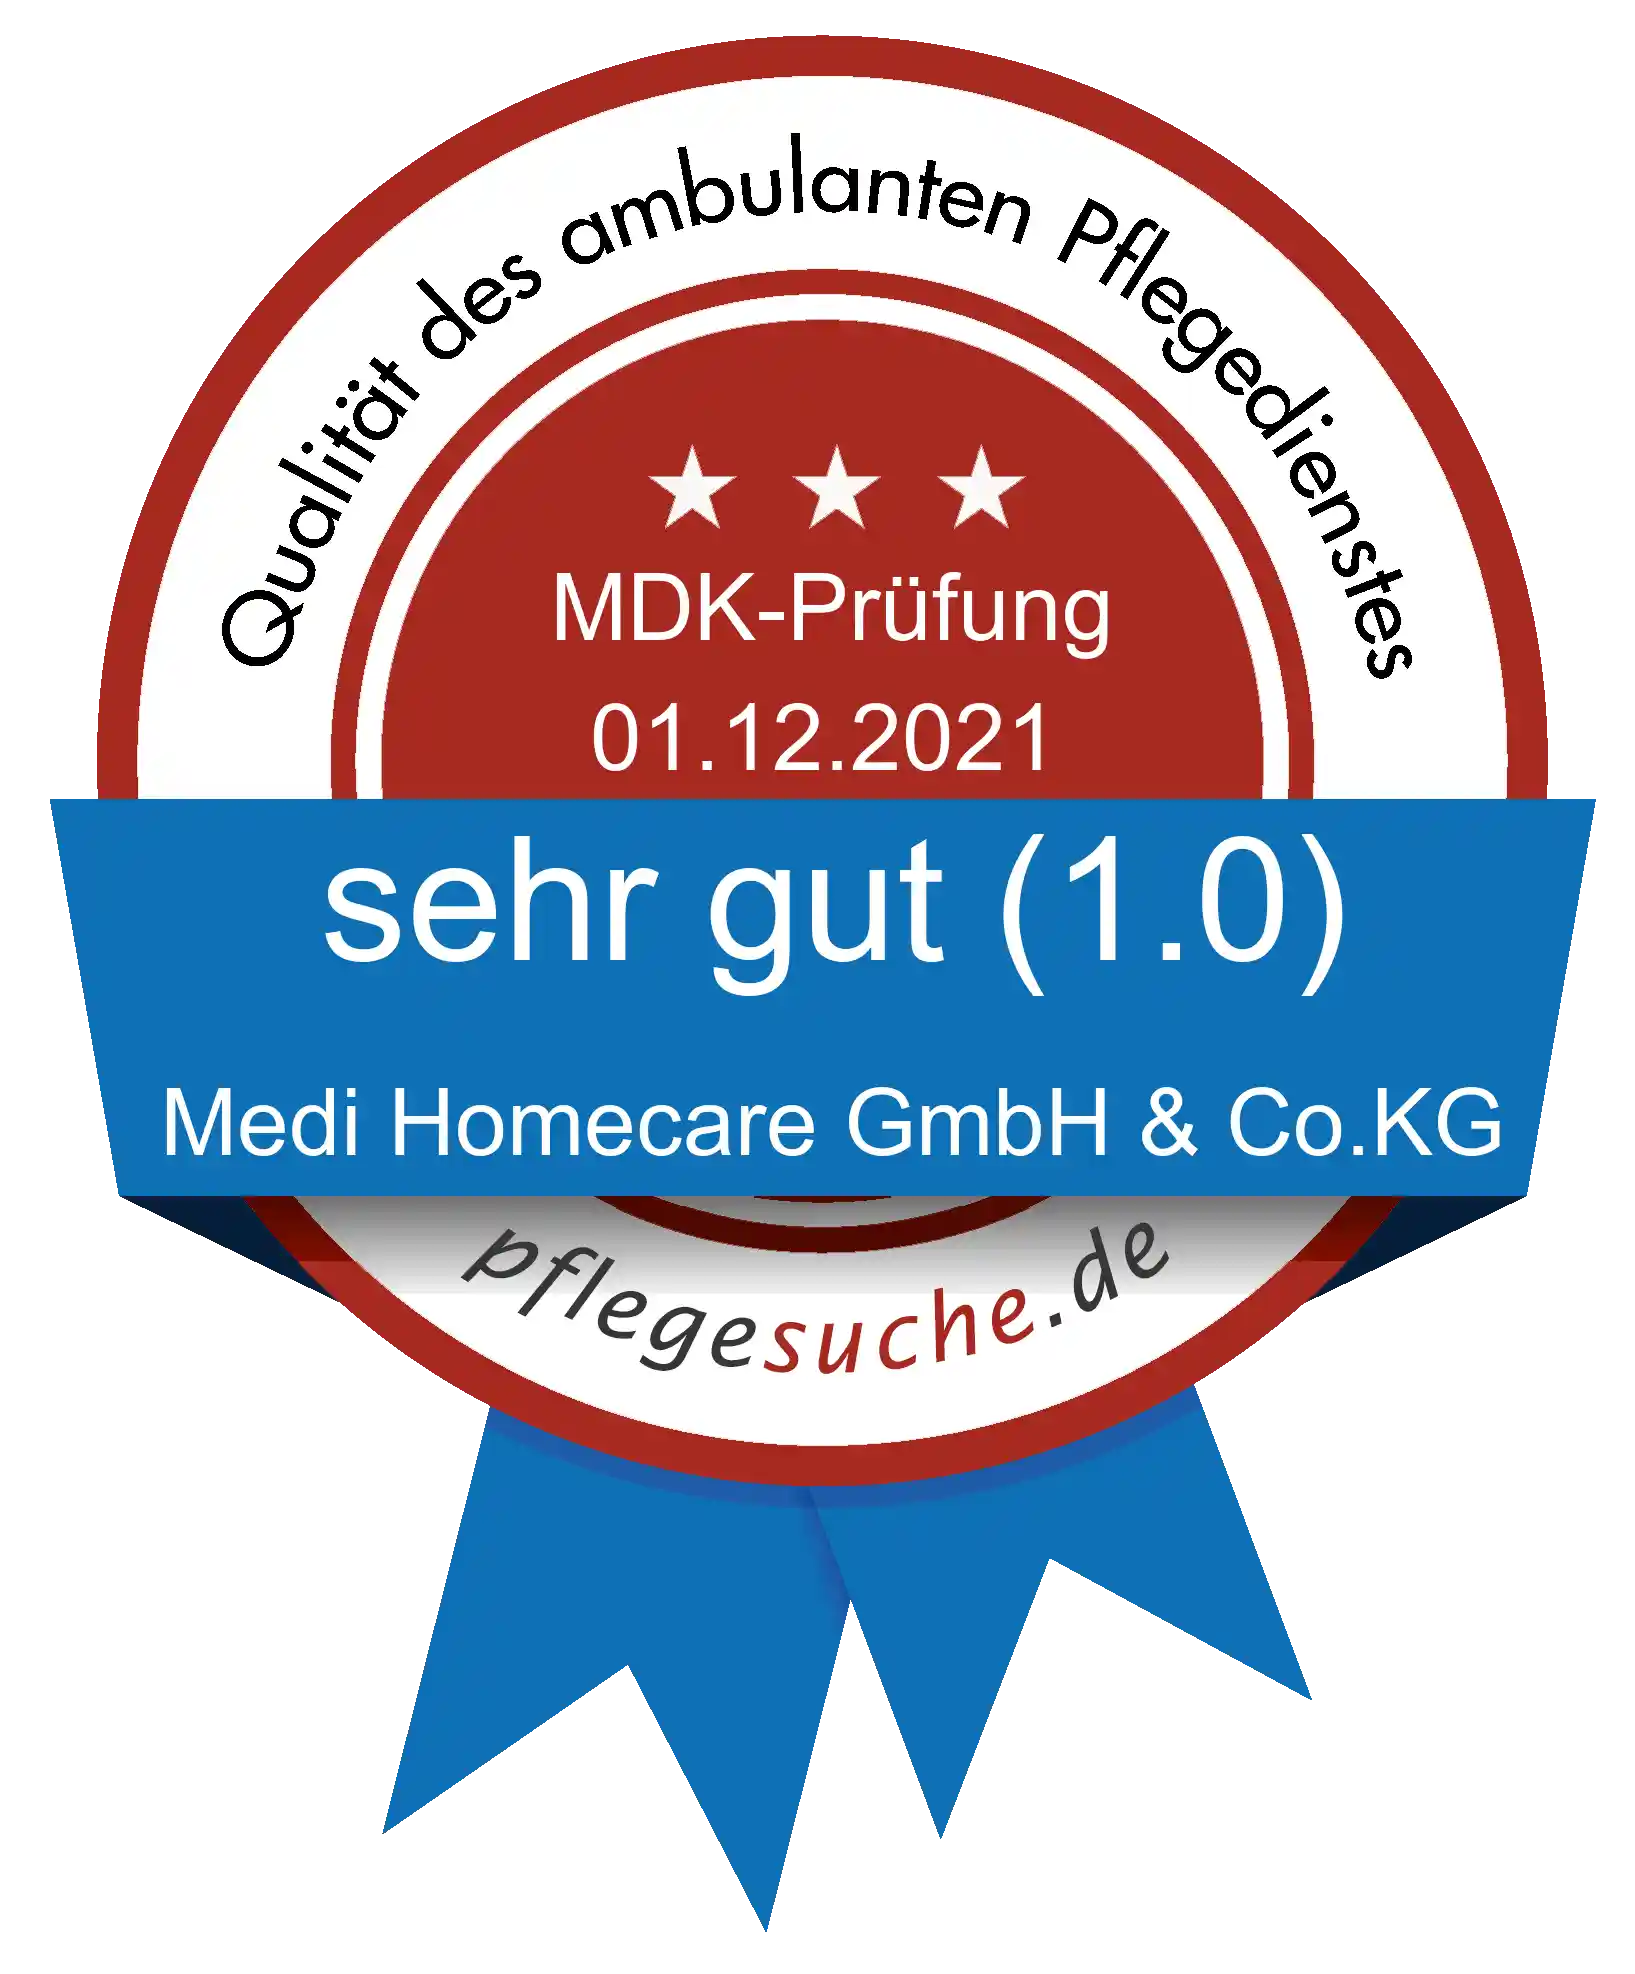 Siegel Benotung: Medi Homecare GmbH & Co.KG